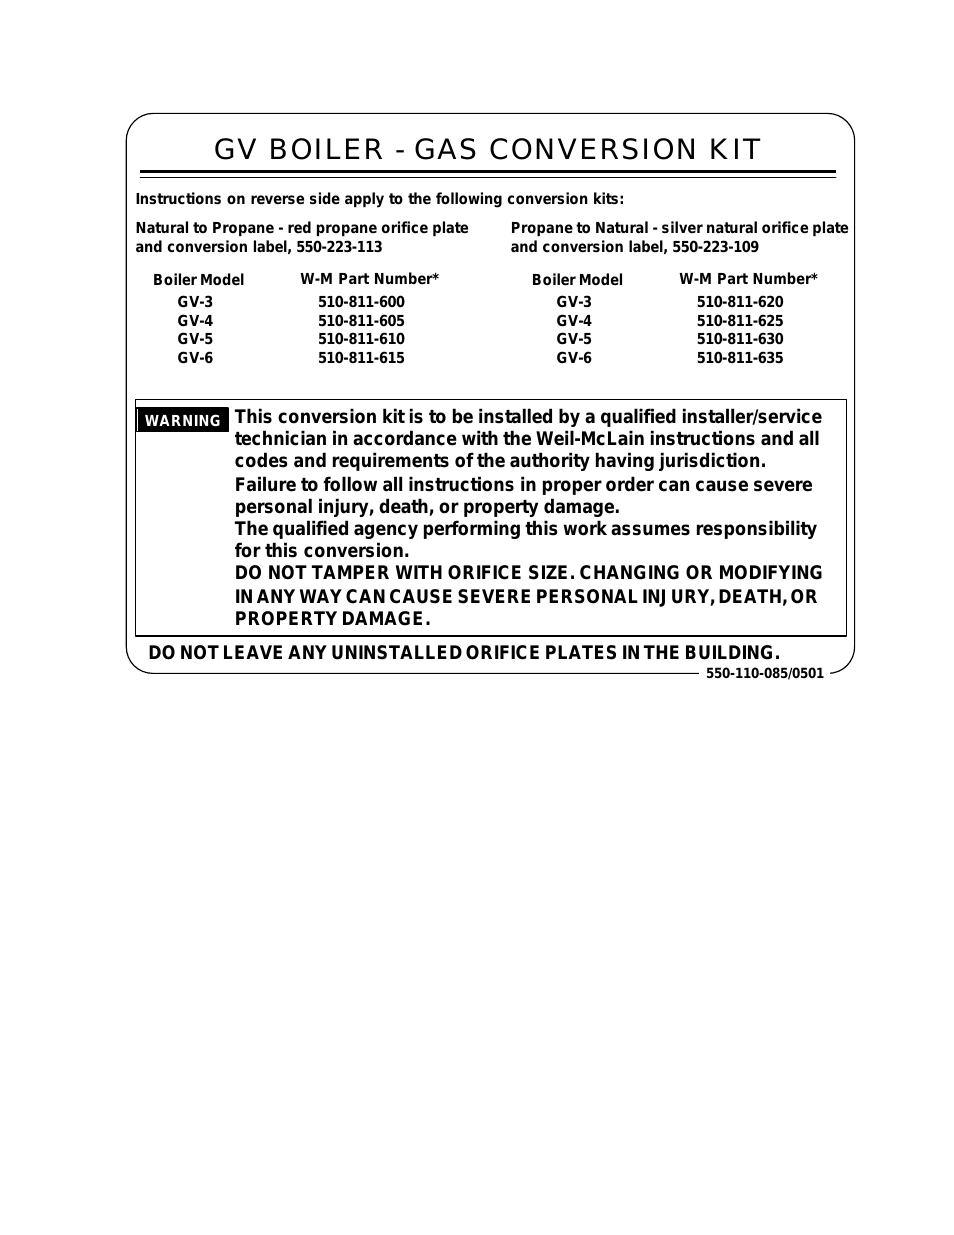 GAS CONVERSION KIT GV-5 510-811-610